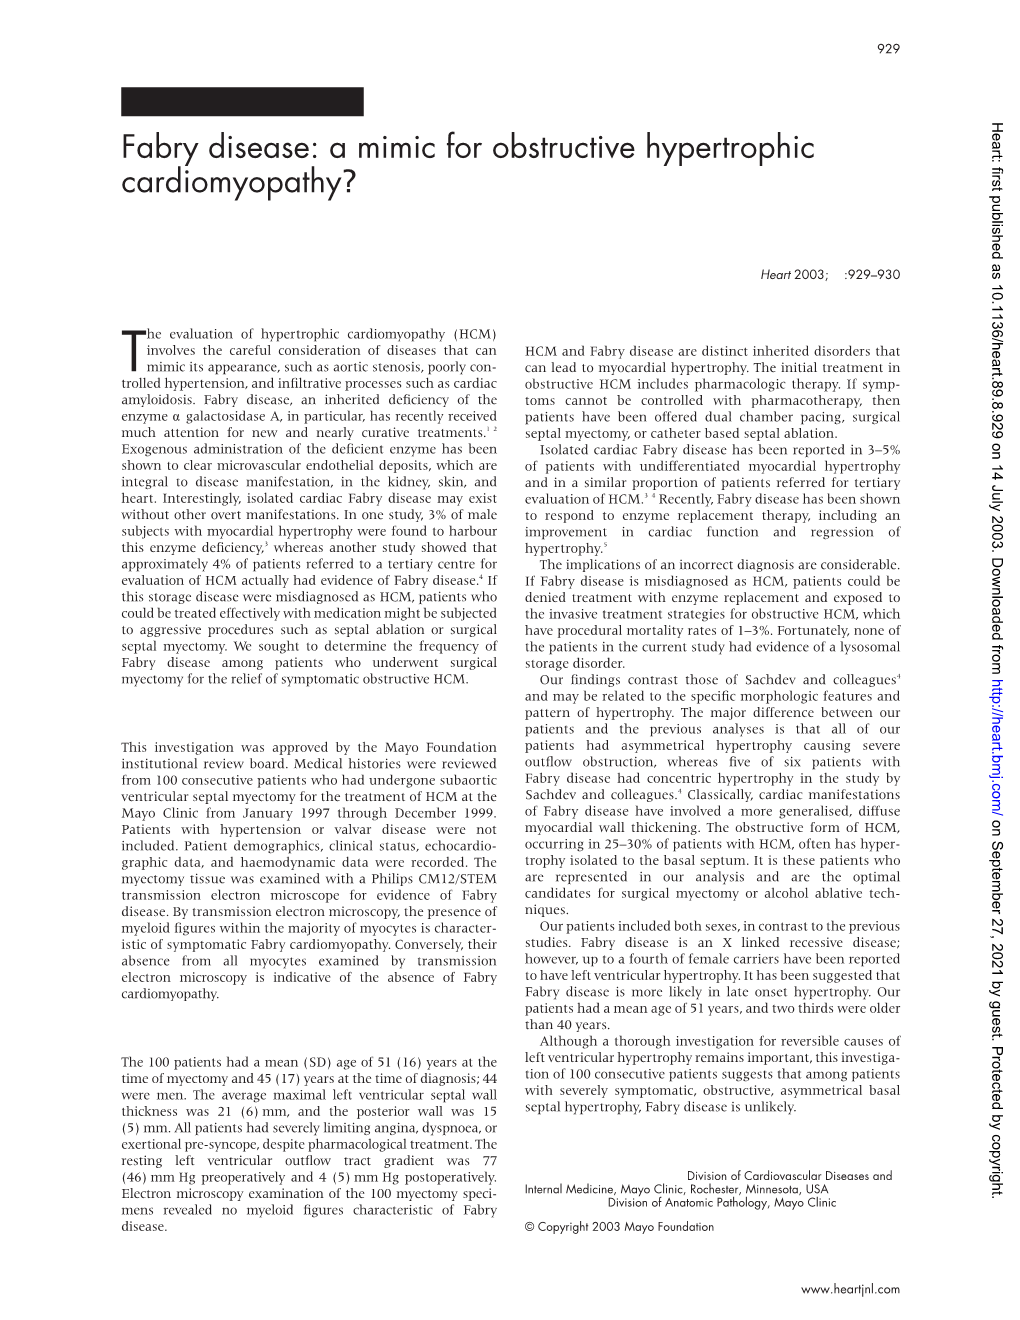 Fabry Disease: a Mimic for Obstructive Hypertrophic Cardiomyopathy? S R Ommen, R a Nishimura, W D Edwards